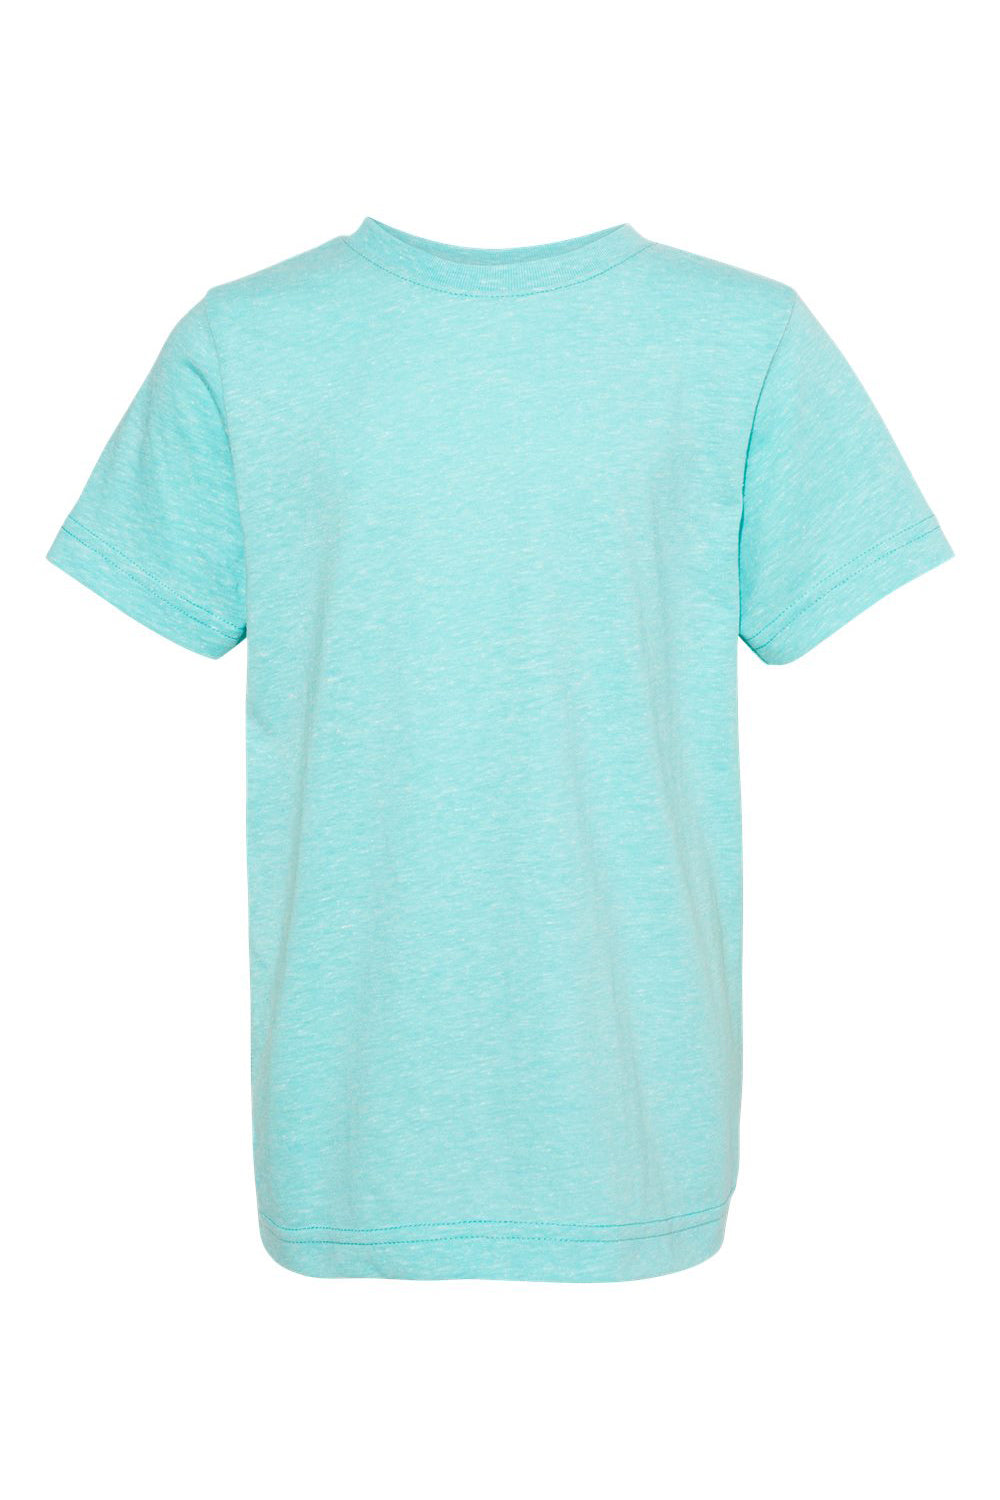 LAT 6191 Youth Harborside Melange Short Sleeve Crewneck T-Shirt Caribbean Blue Flat Front